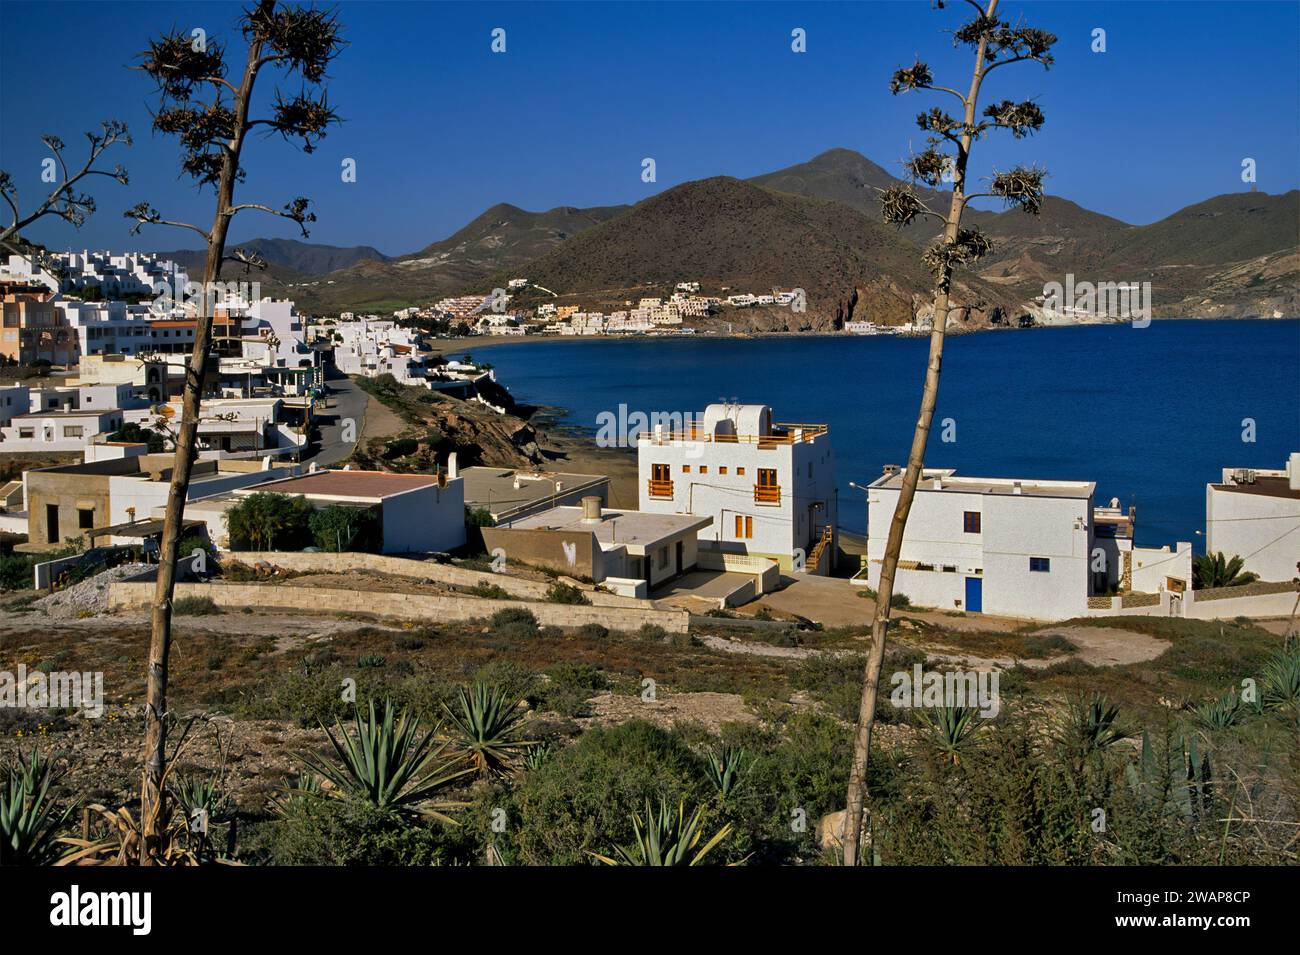 Ferienort San Jose über dem Mittelmeer in der Nähe von Cabo de Gata, Costa de Almeria, Costa del Sol, Andalusien, Spanien Stockfoto